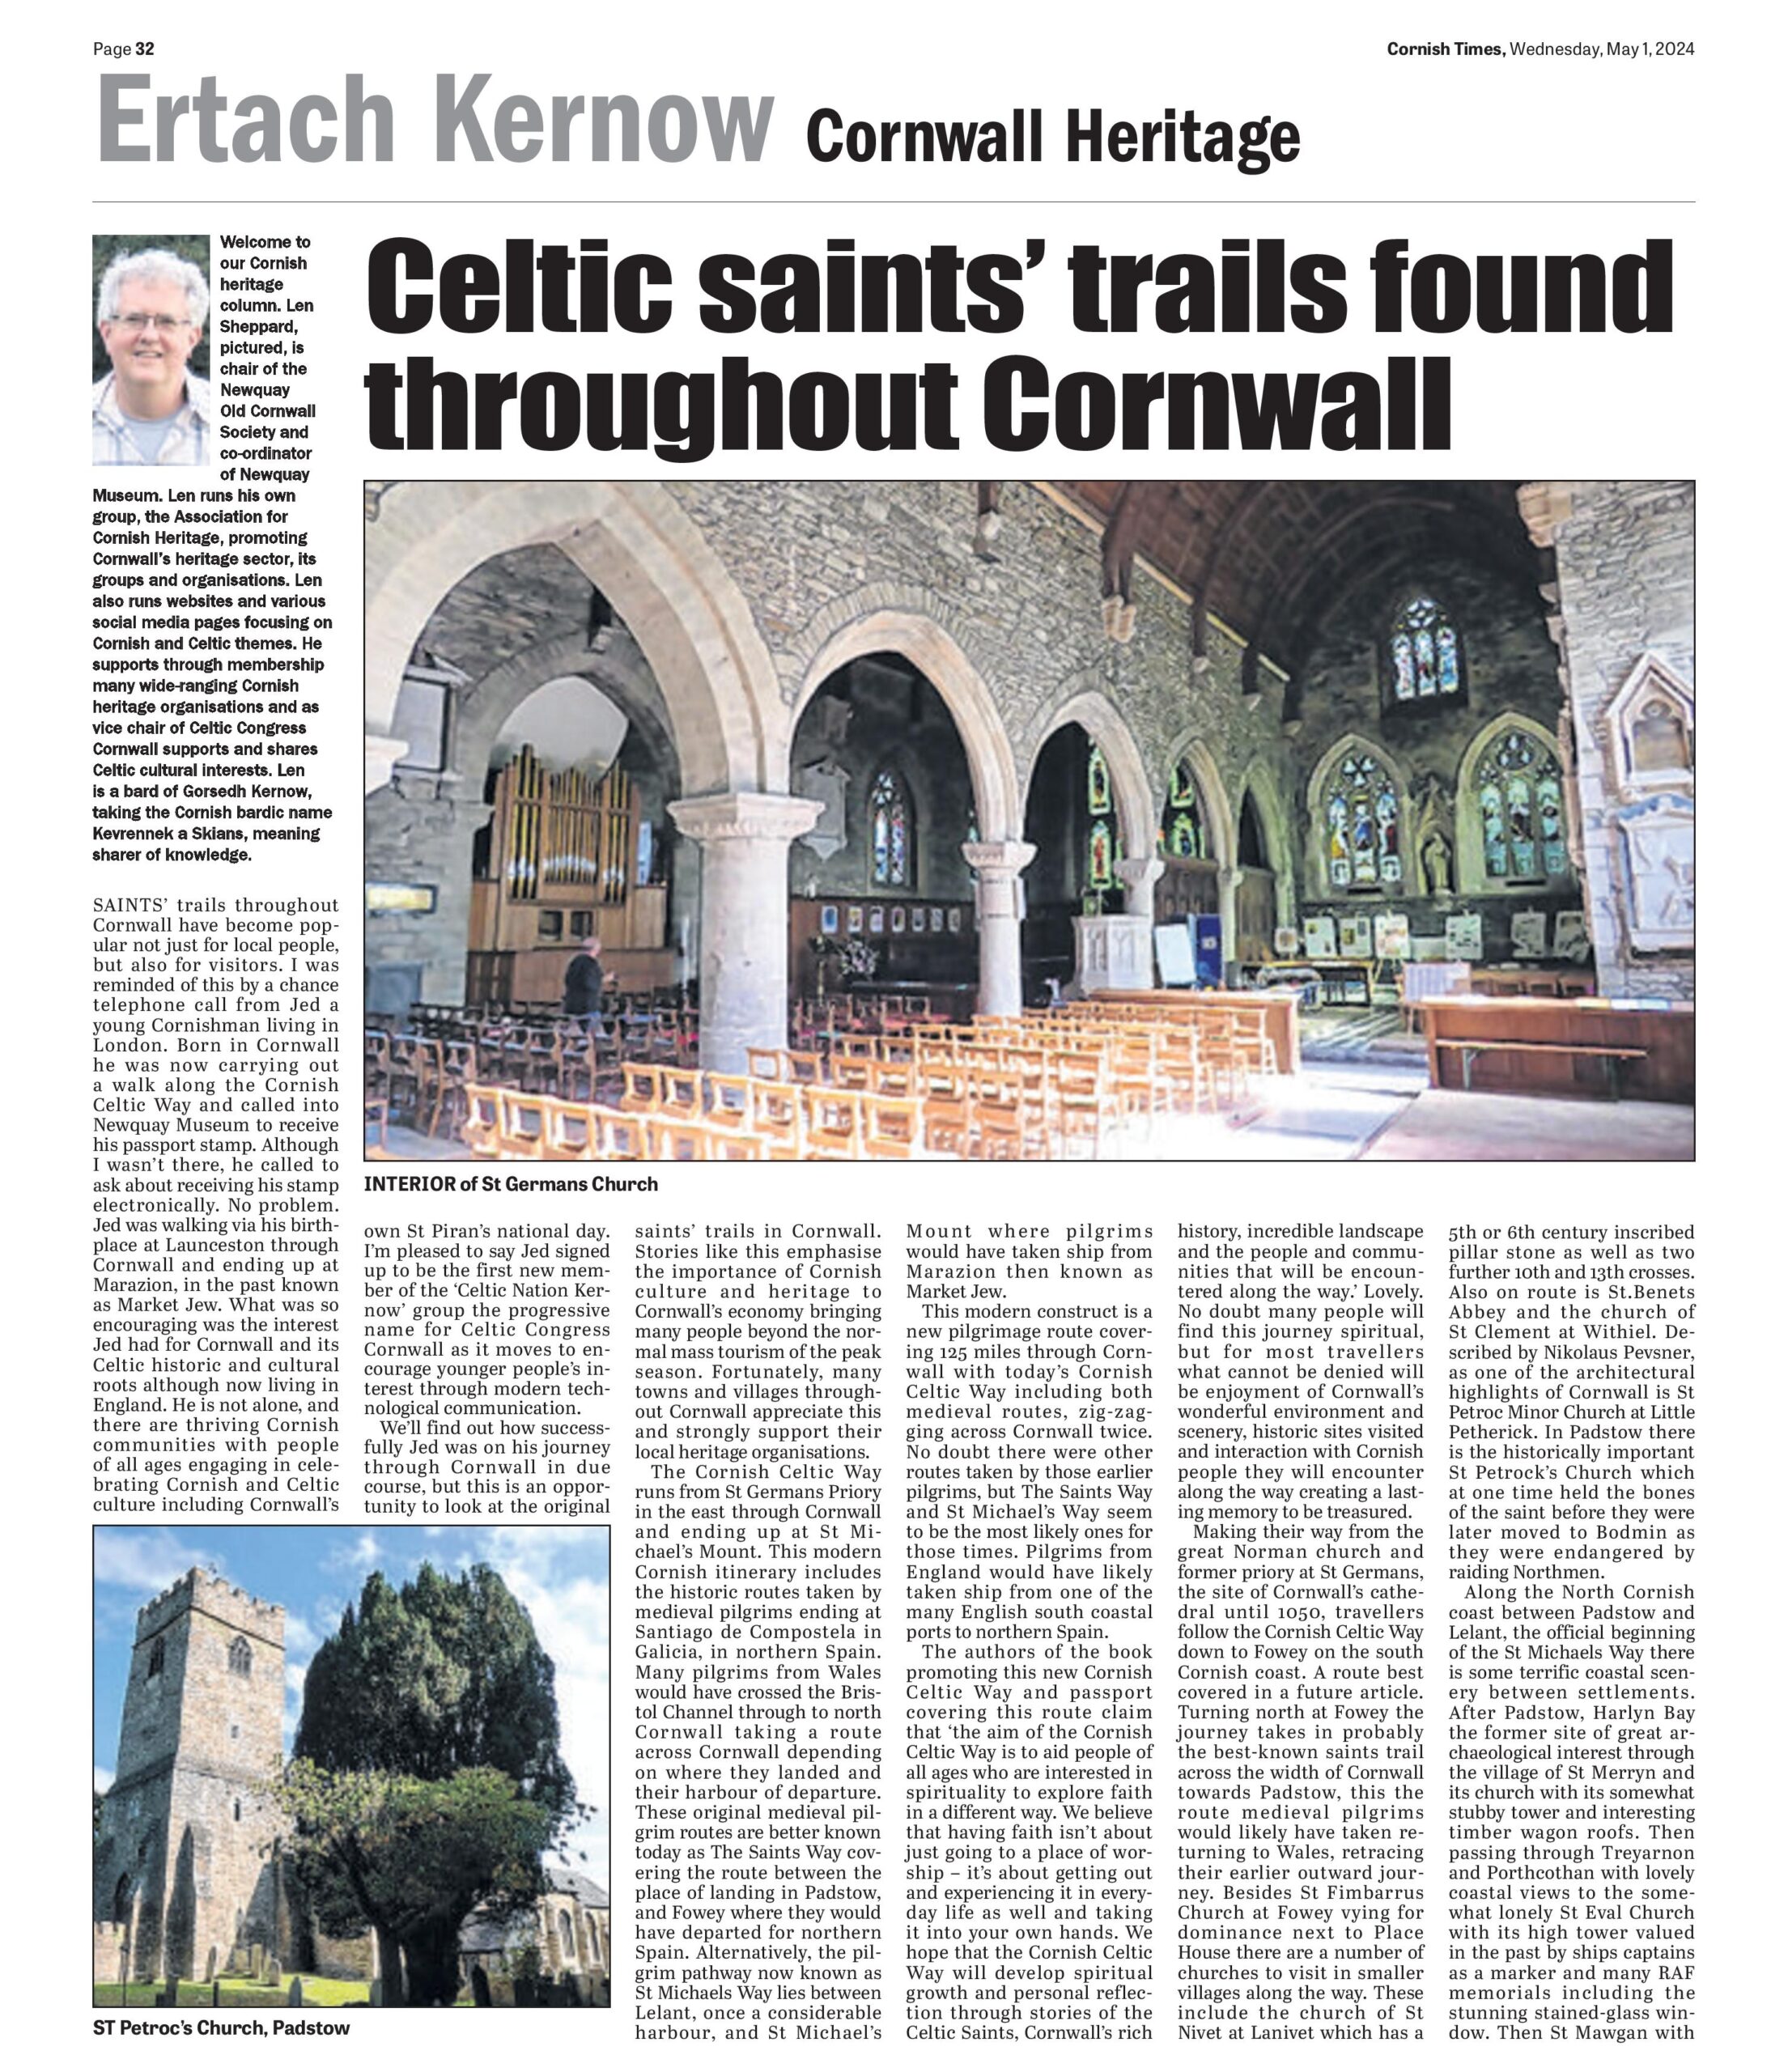 Ertach Kernow - Celtic saints trails found throughout Cornwall